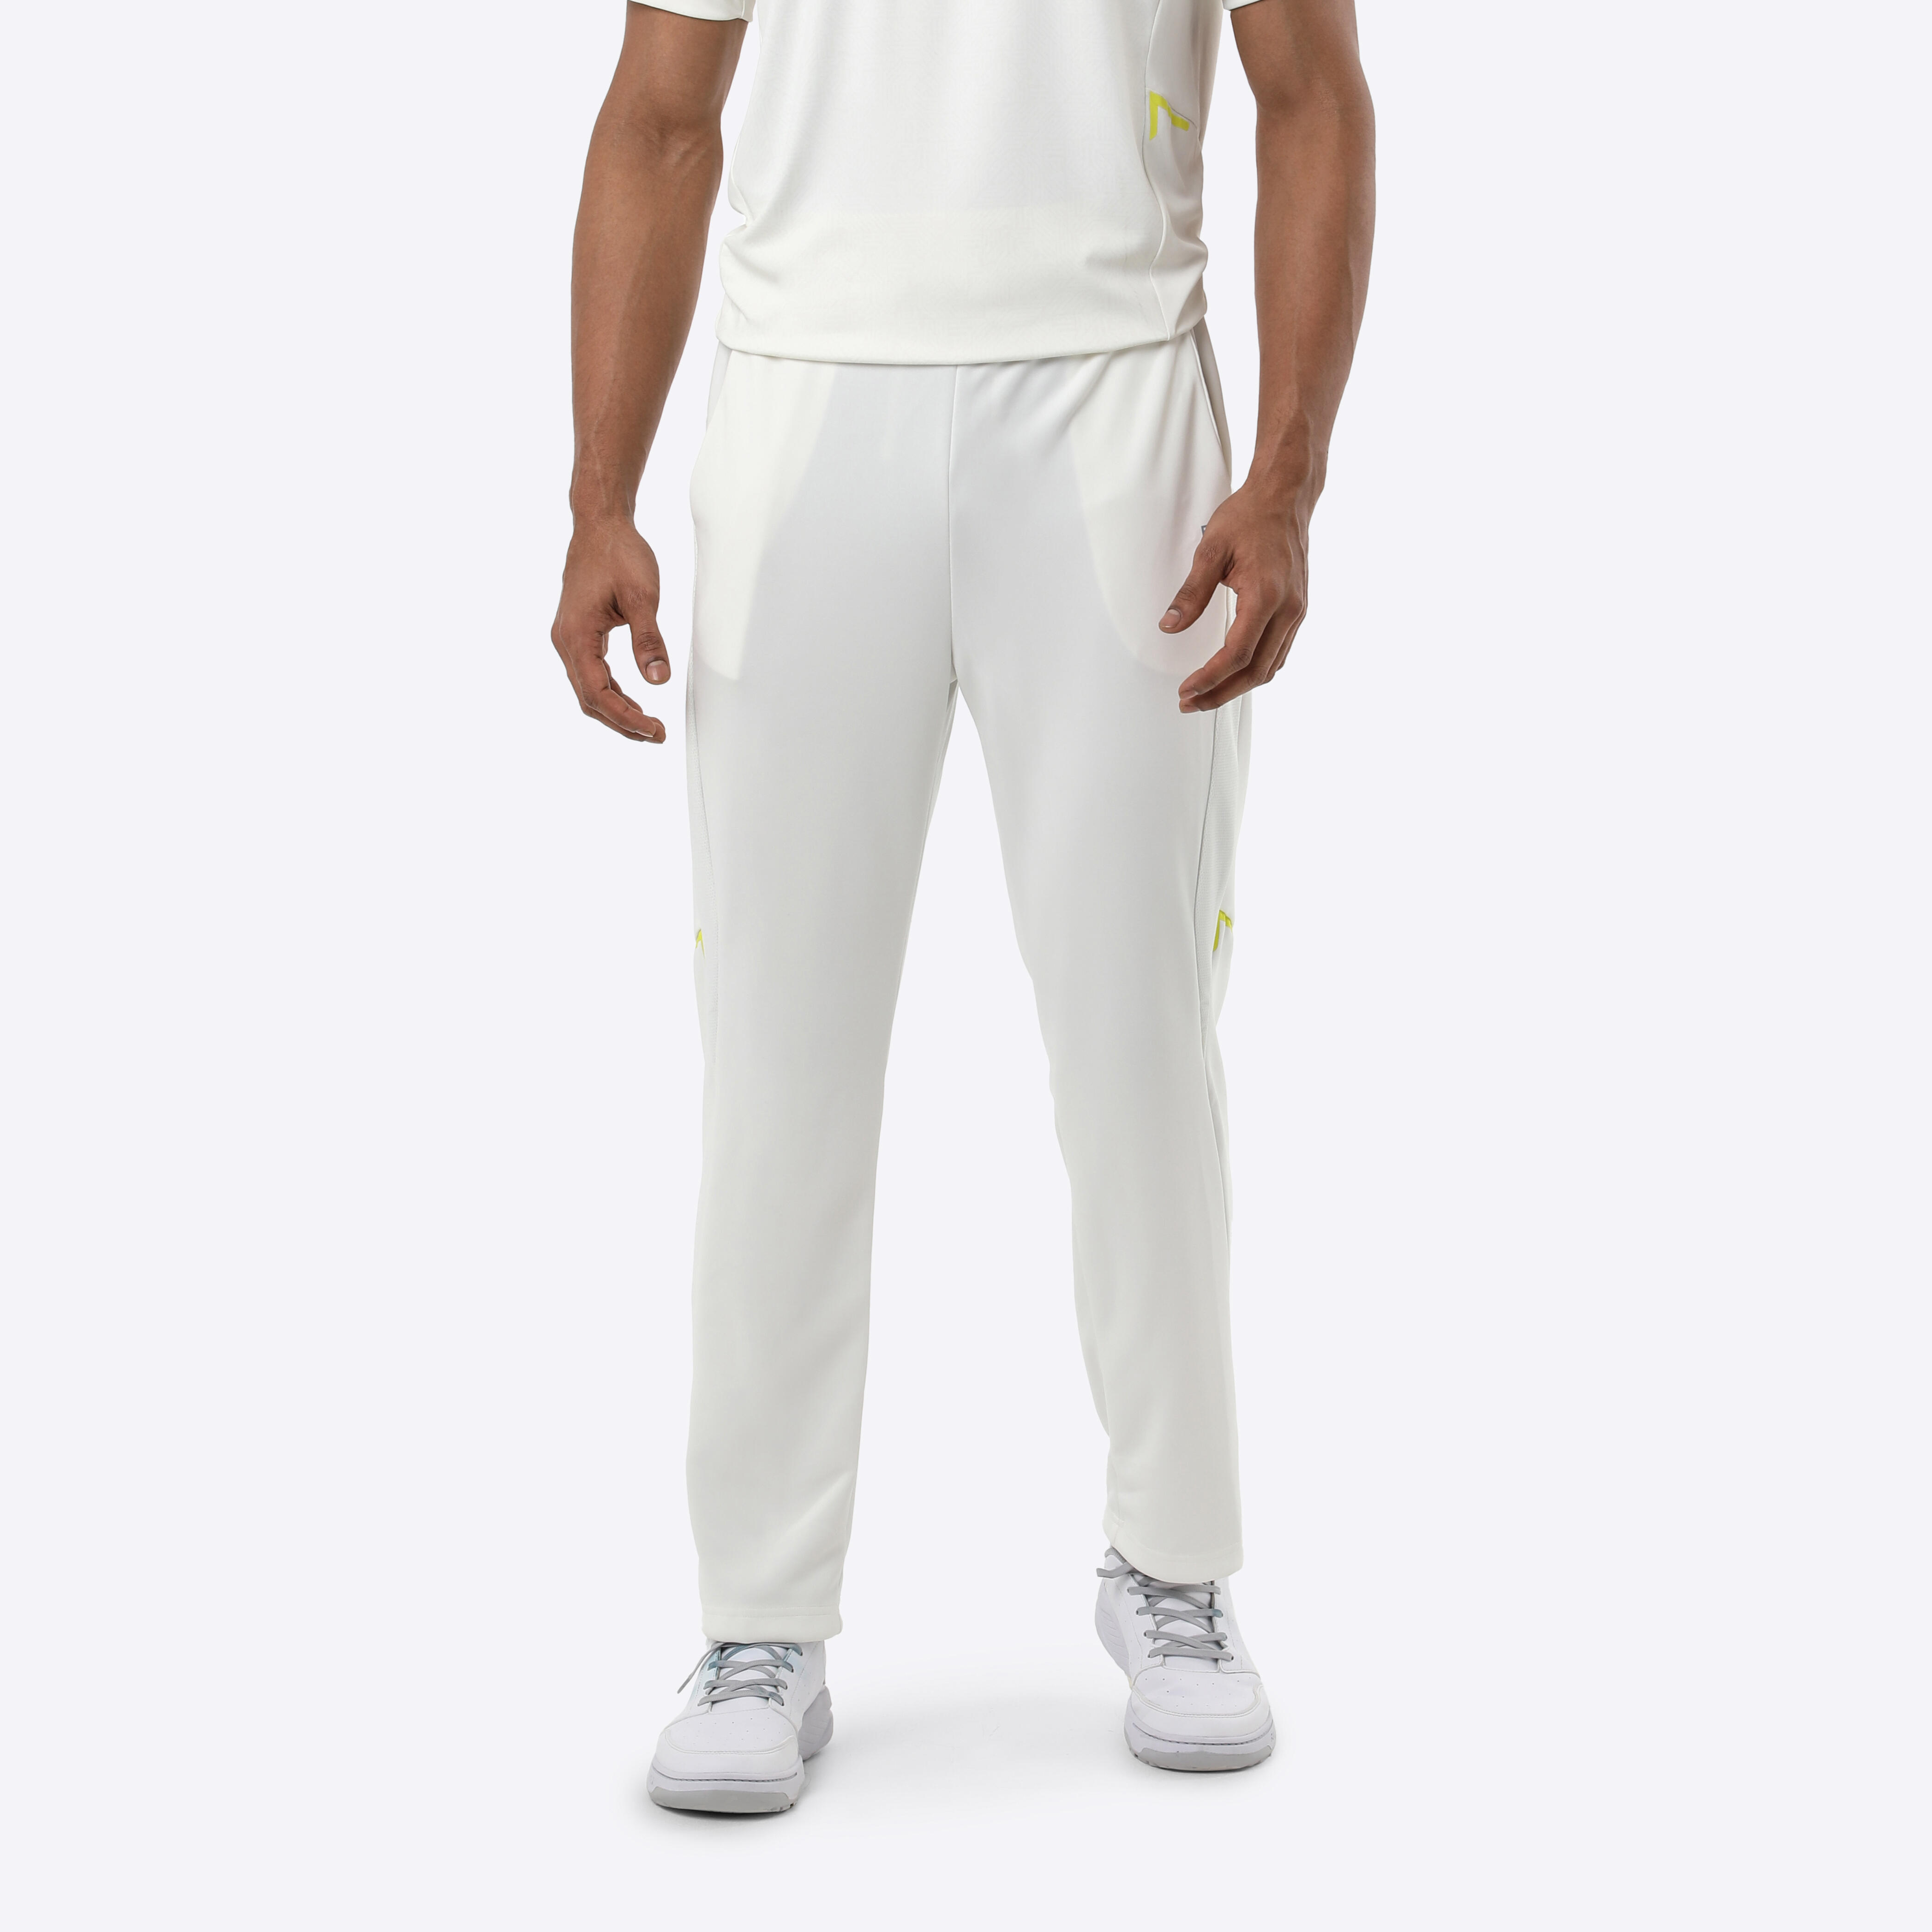 Kookaburra Pro Player Cricket Trousers 2022  Buy Now